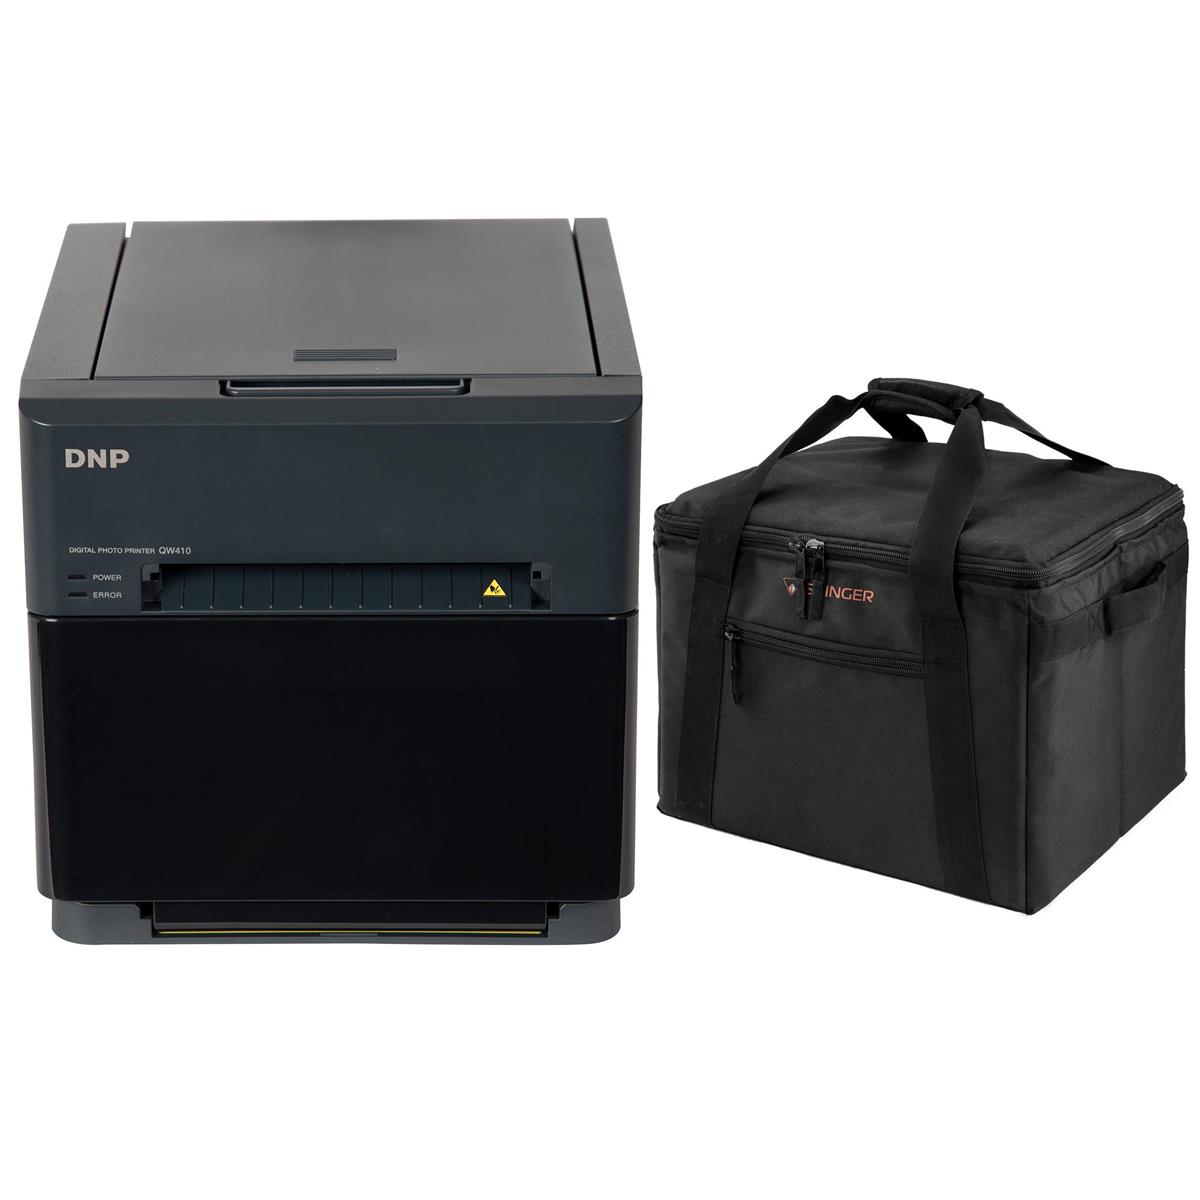 Image of DNP QW410 4.5&quot; Dye Sublimation Printer 300x300dpi W/Slinger Padded Printer Case